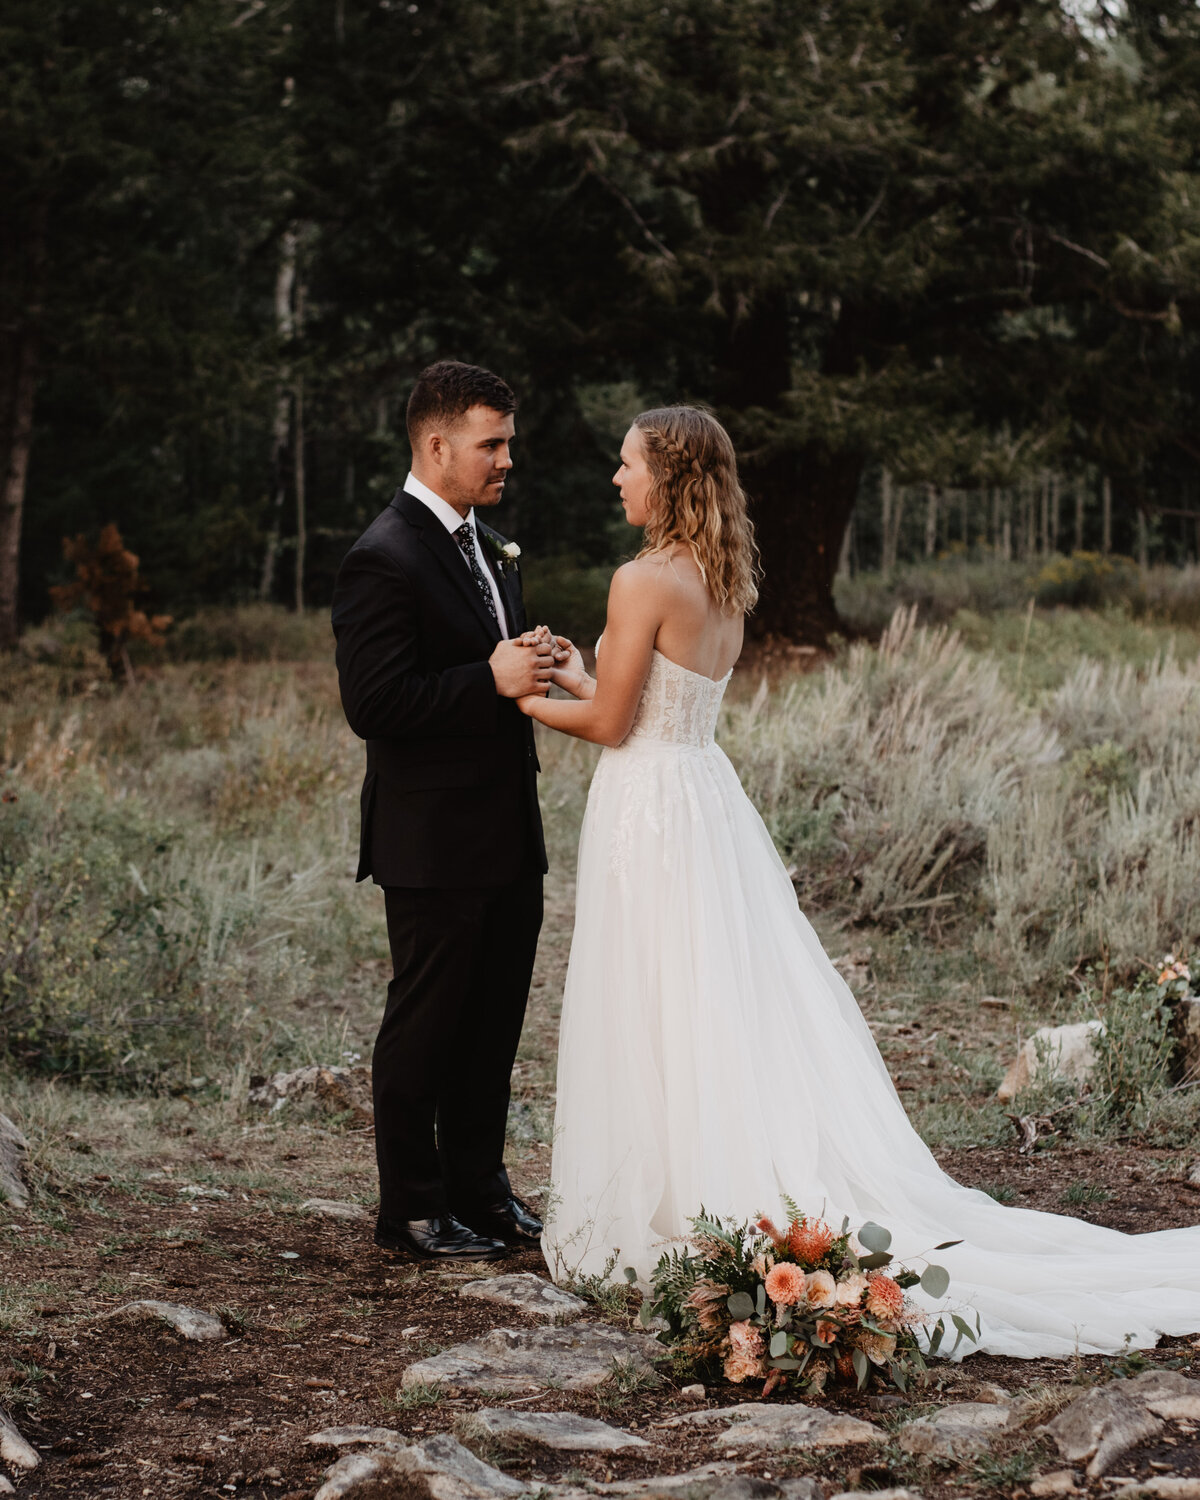 Jackson Hole Photographers capture forest bridals in Grand Teton National Park